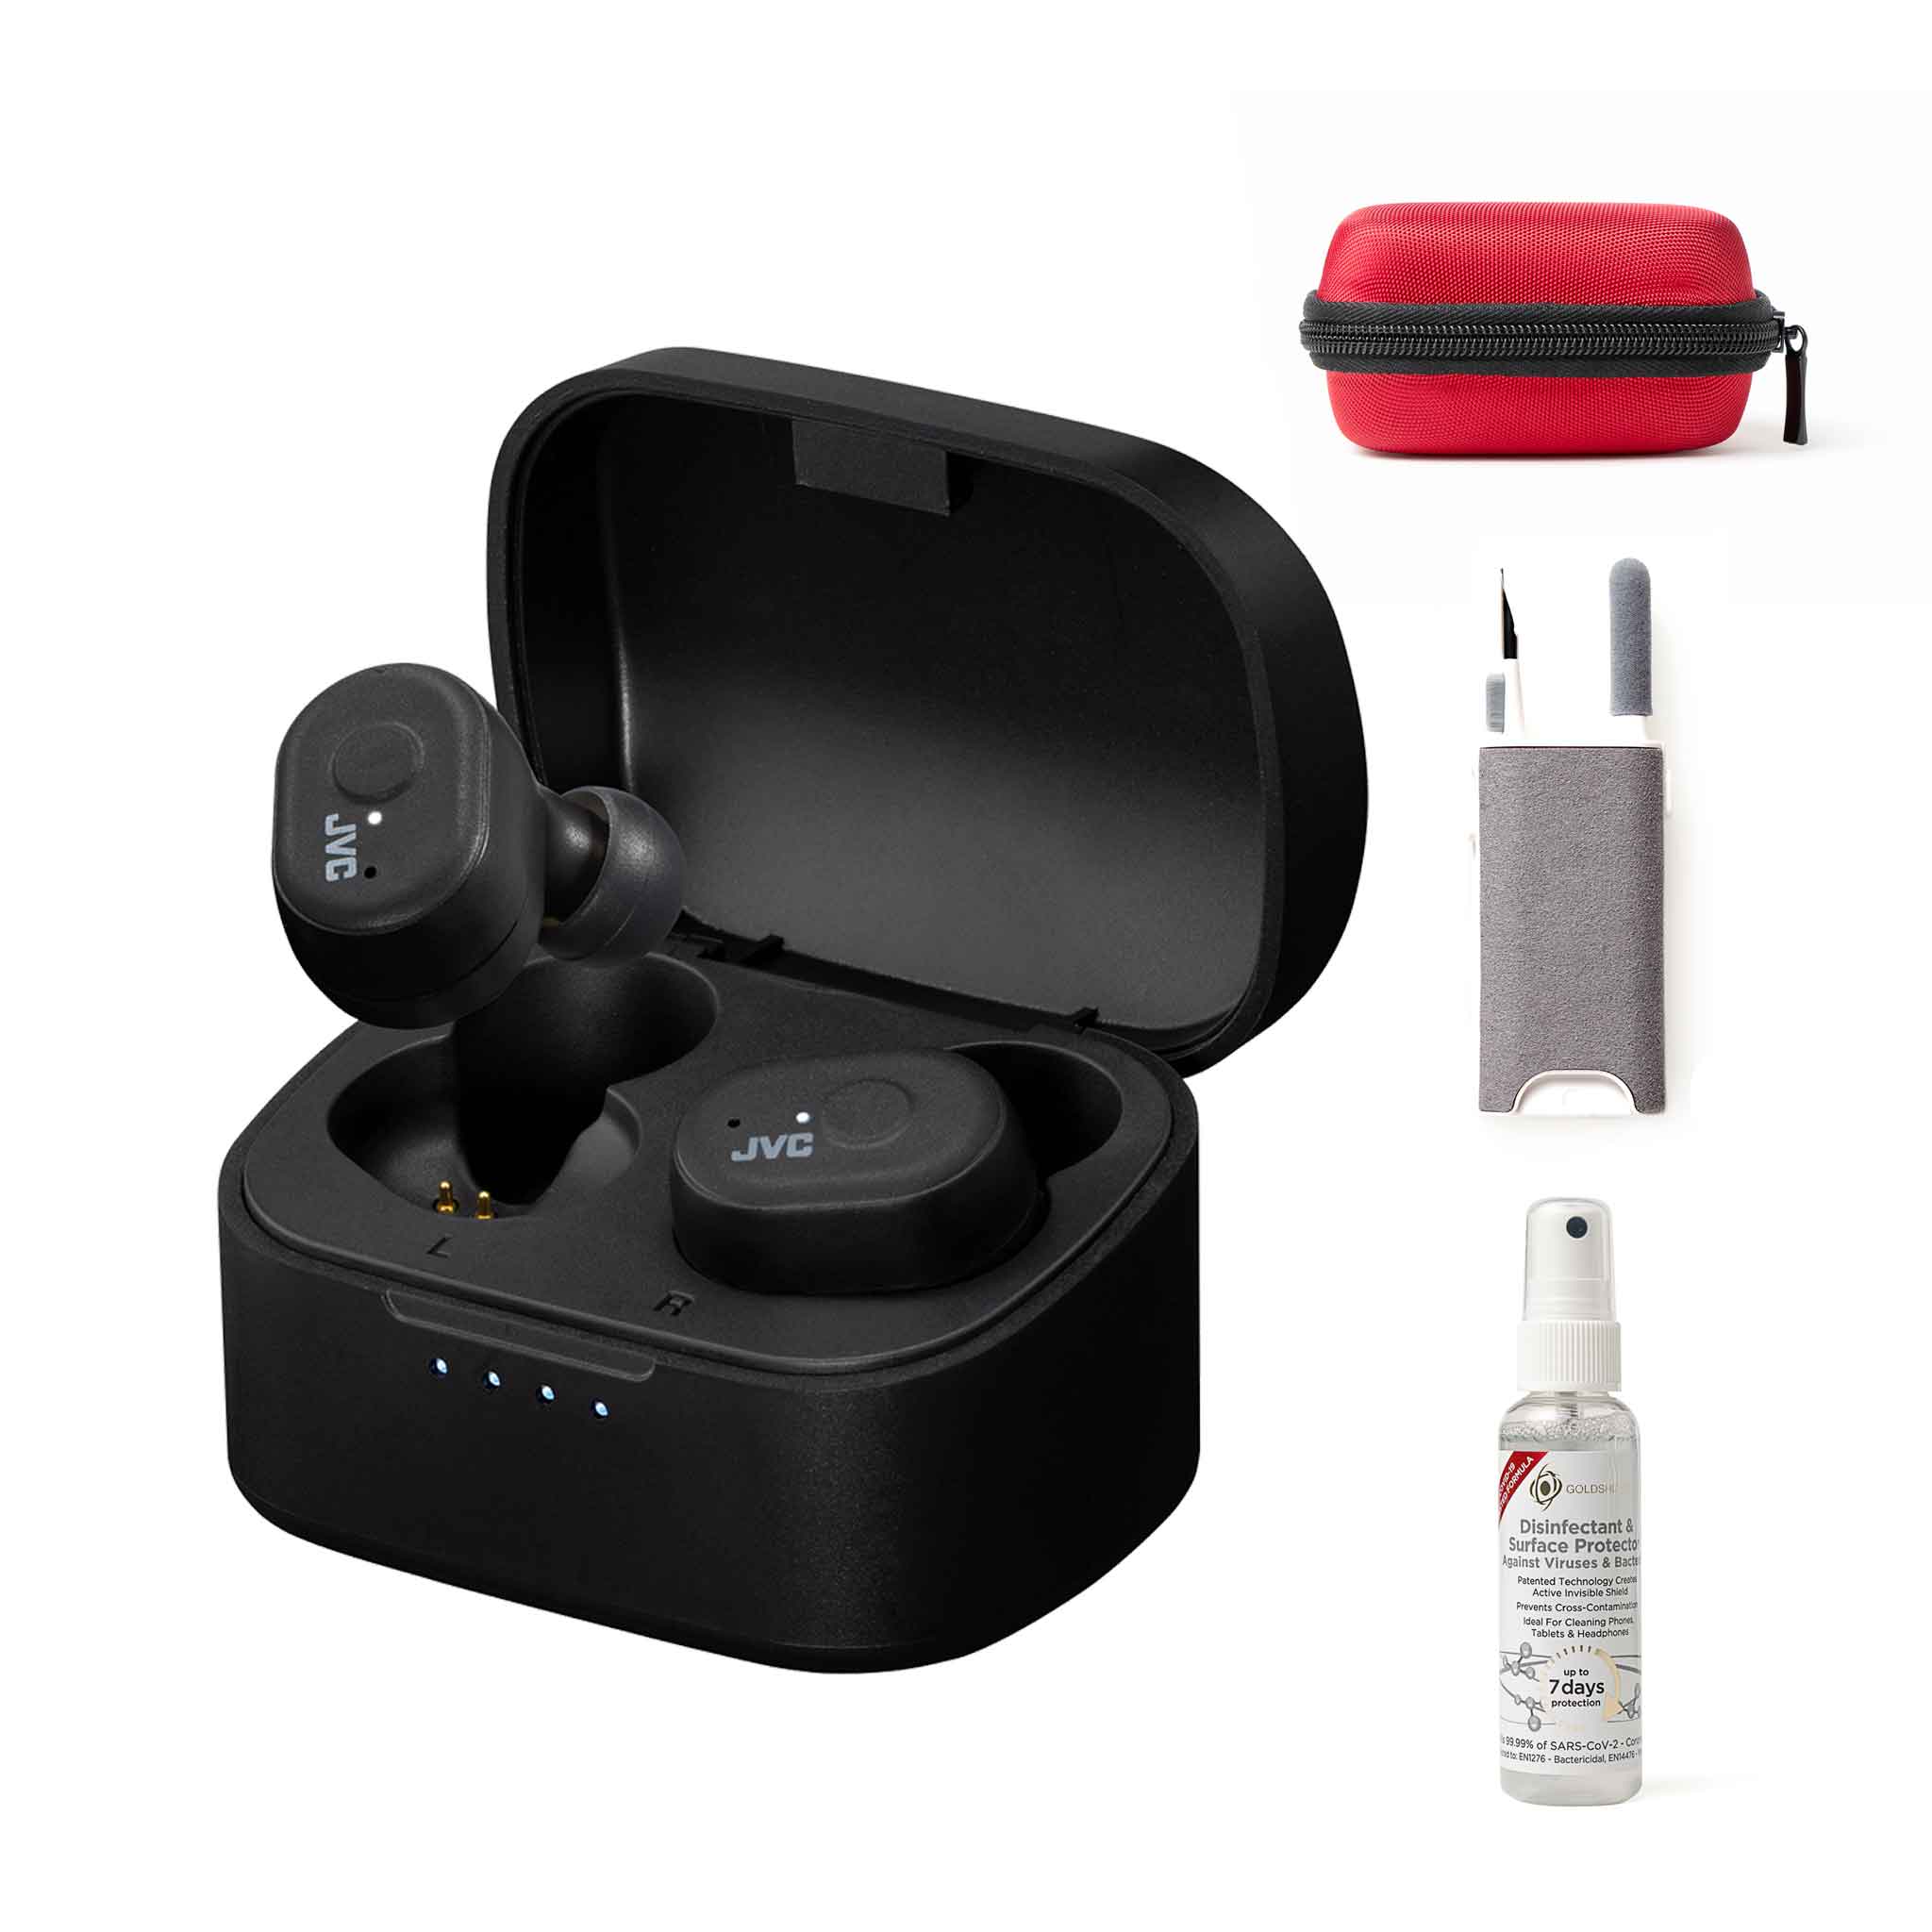 HA-A11T-B wireless earbuds, cleaning kit, case